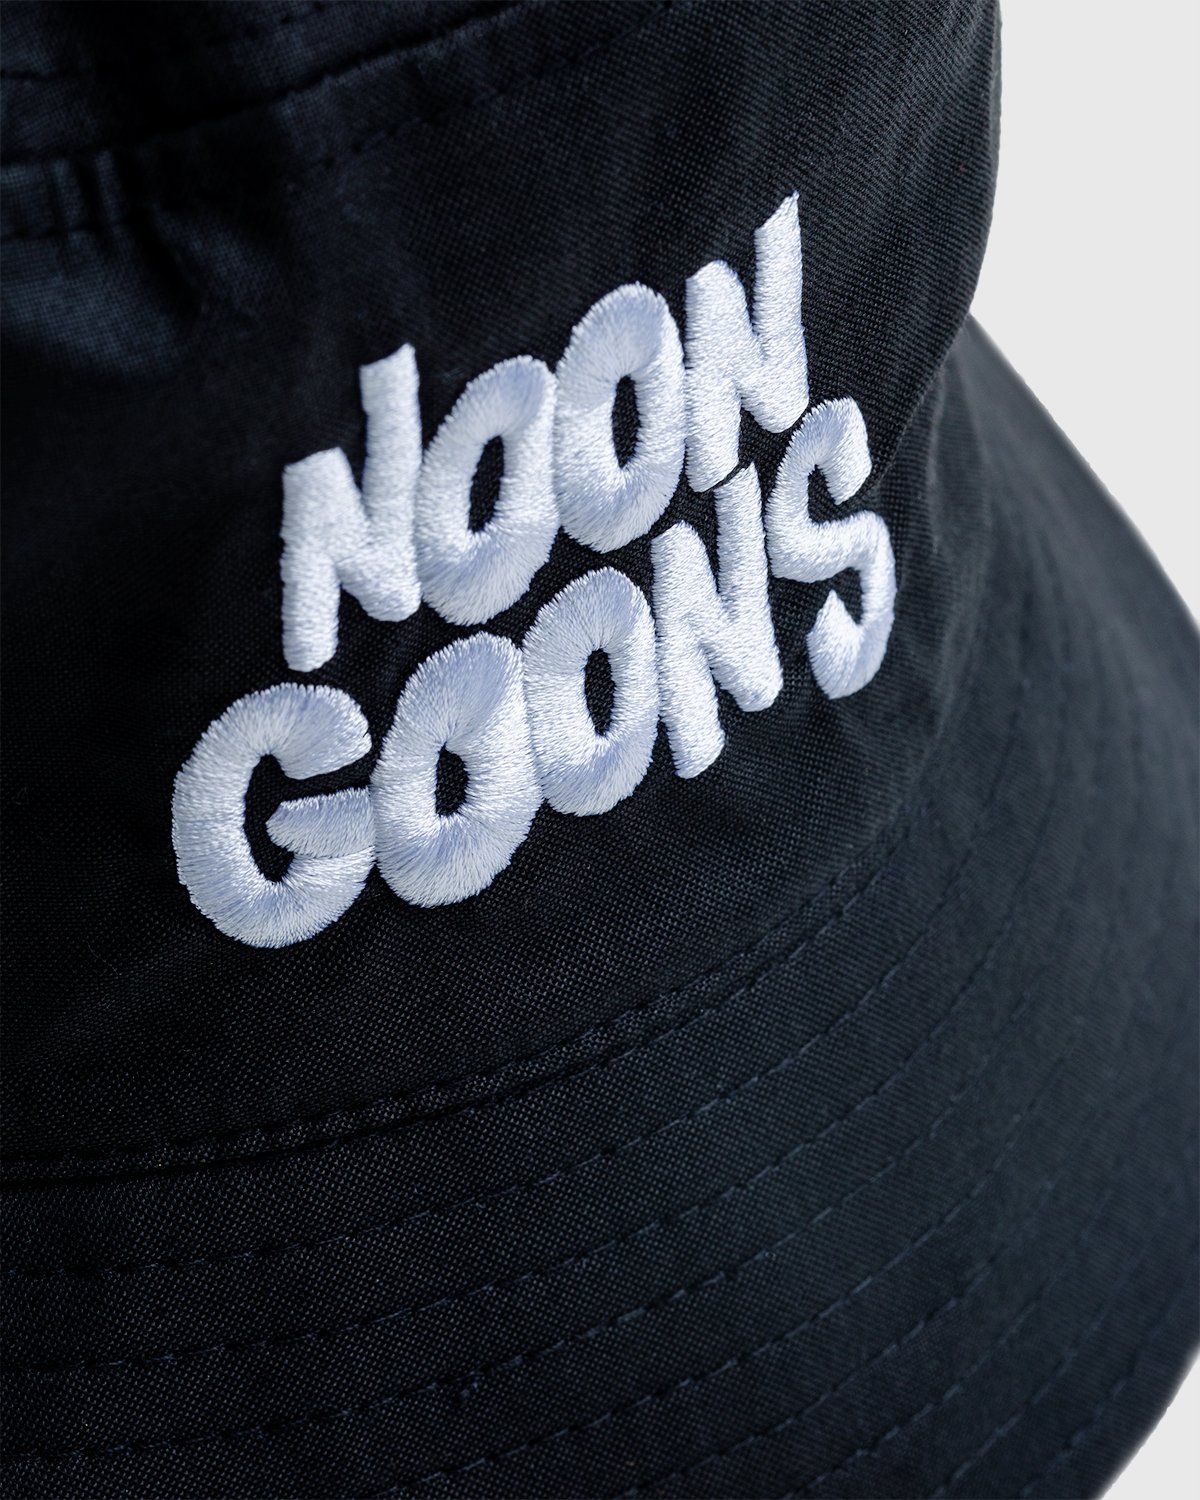 Noon Goons - Gonzo Bucket Hat Black - Accessories - Black - Image 3